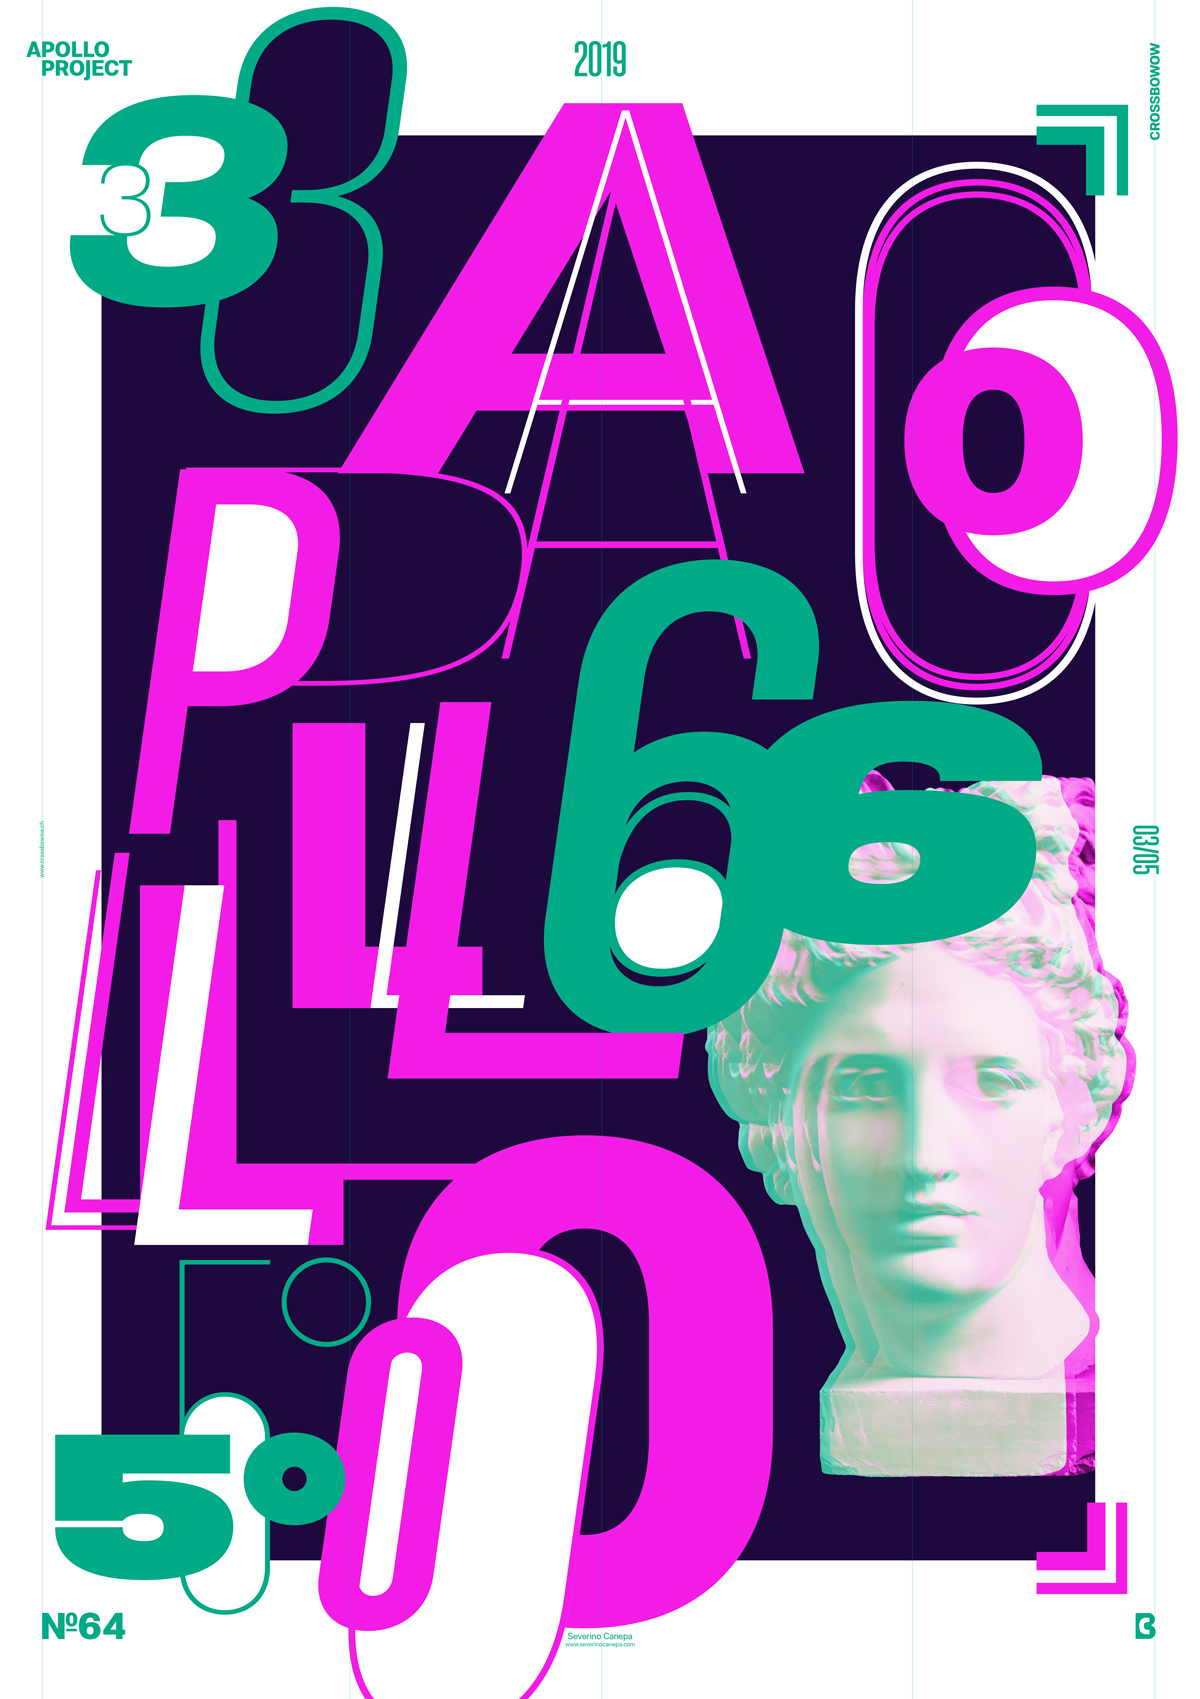 Creative typographic poster design #64 titled Tripolar